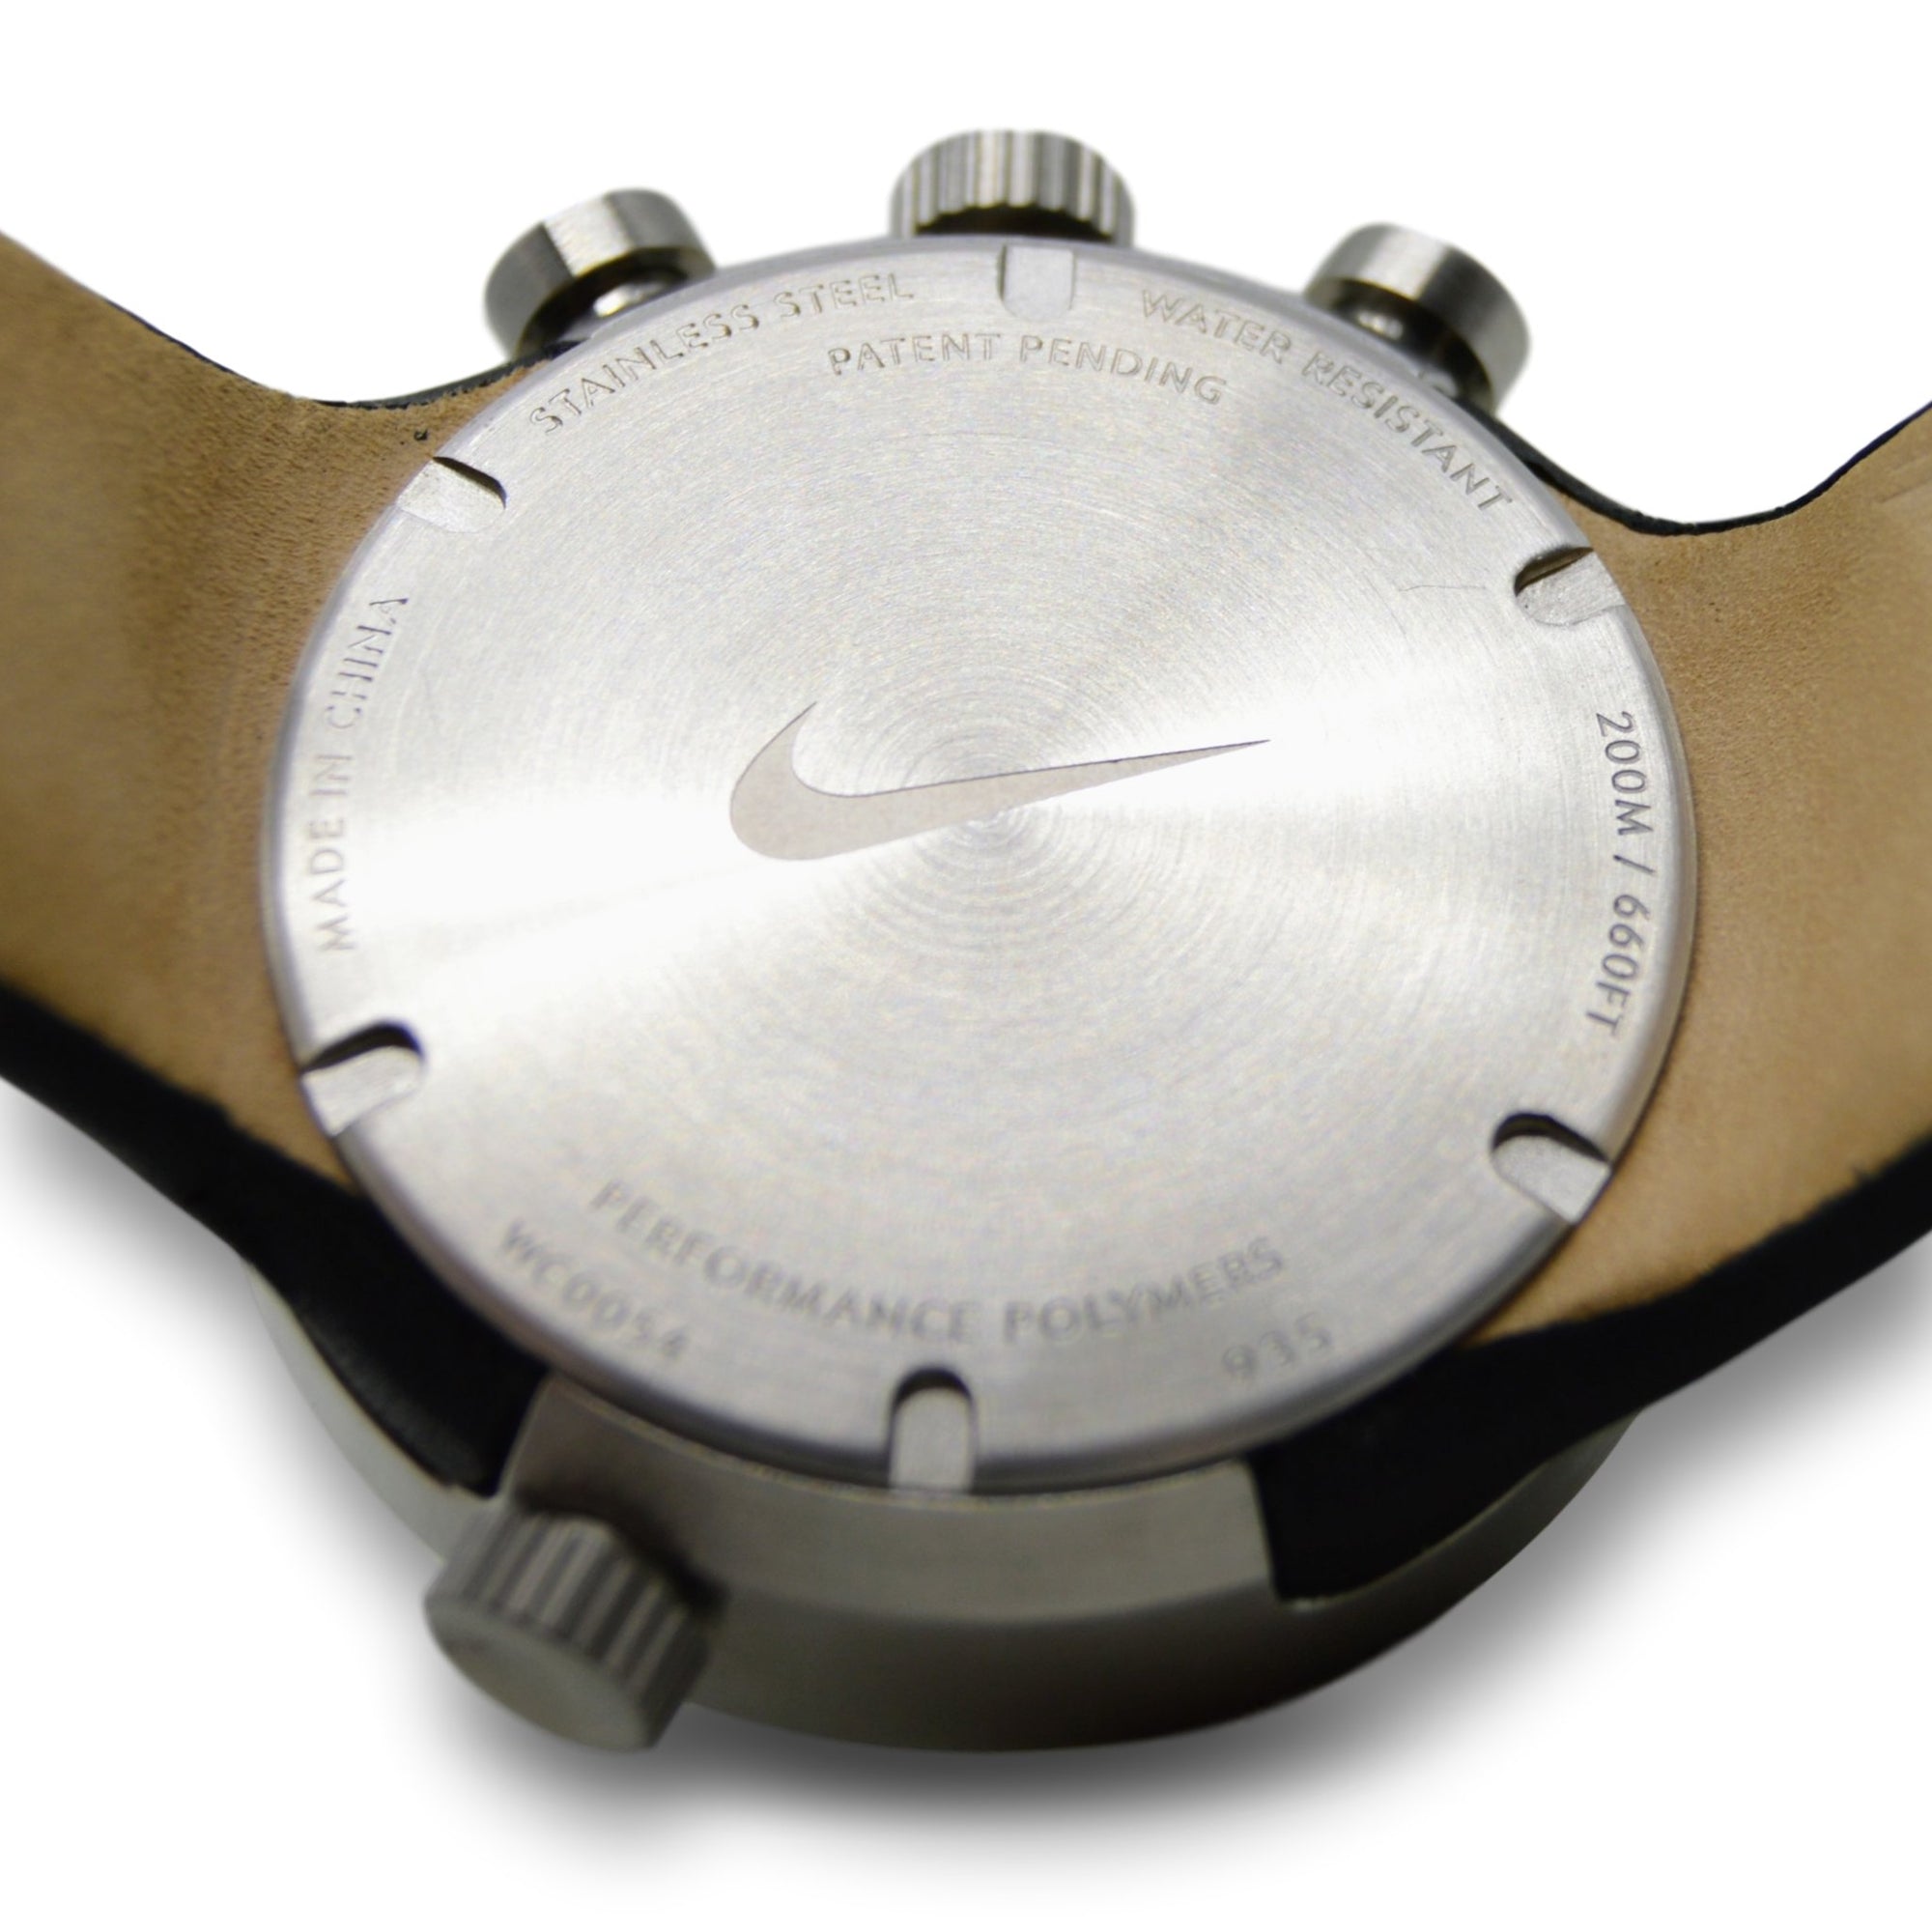 Nike Heritage Alarm Chrono Black Leather Watch WC0054-001 | Rare Find | - Elevn:59